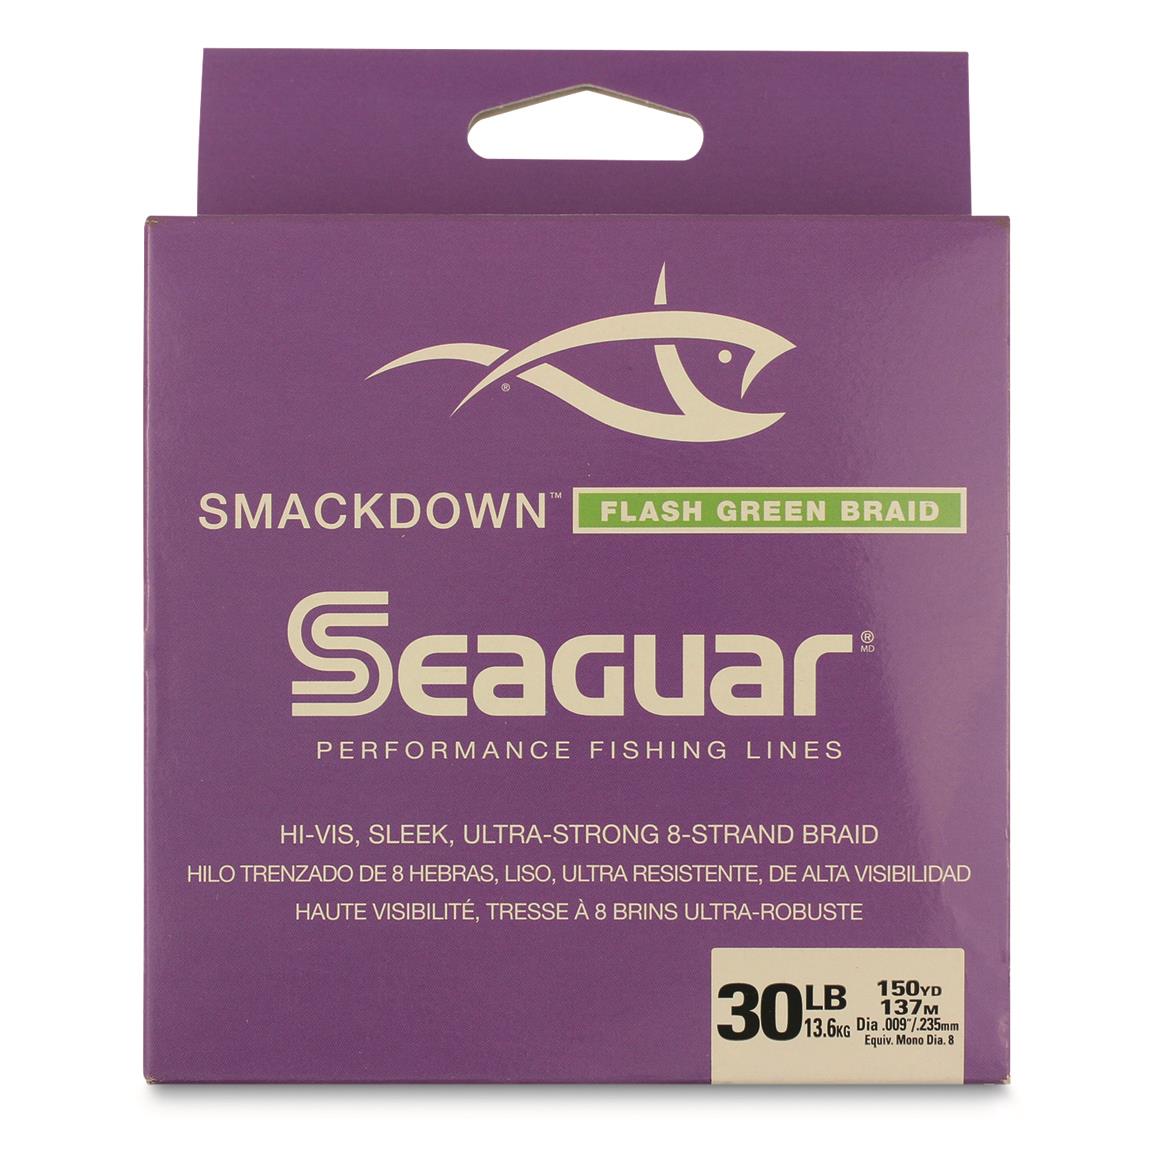 Seaguar Smackdown 8-Strand Braid, 150 yard, Flash Green